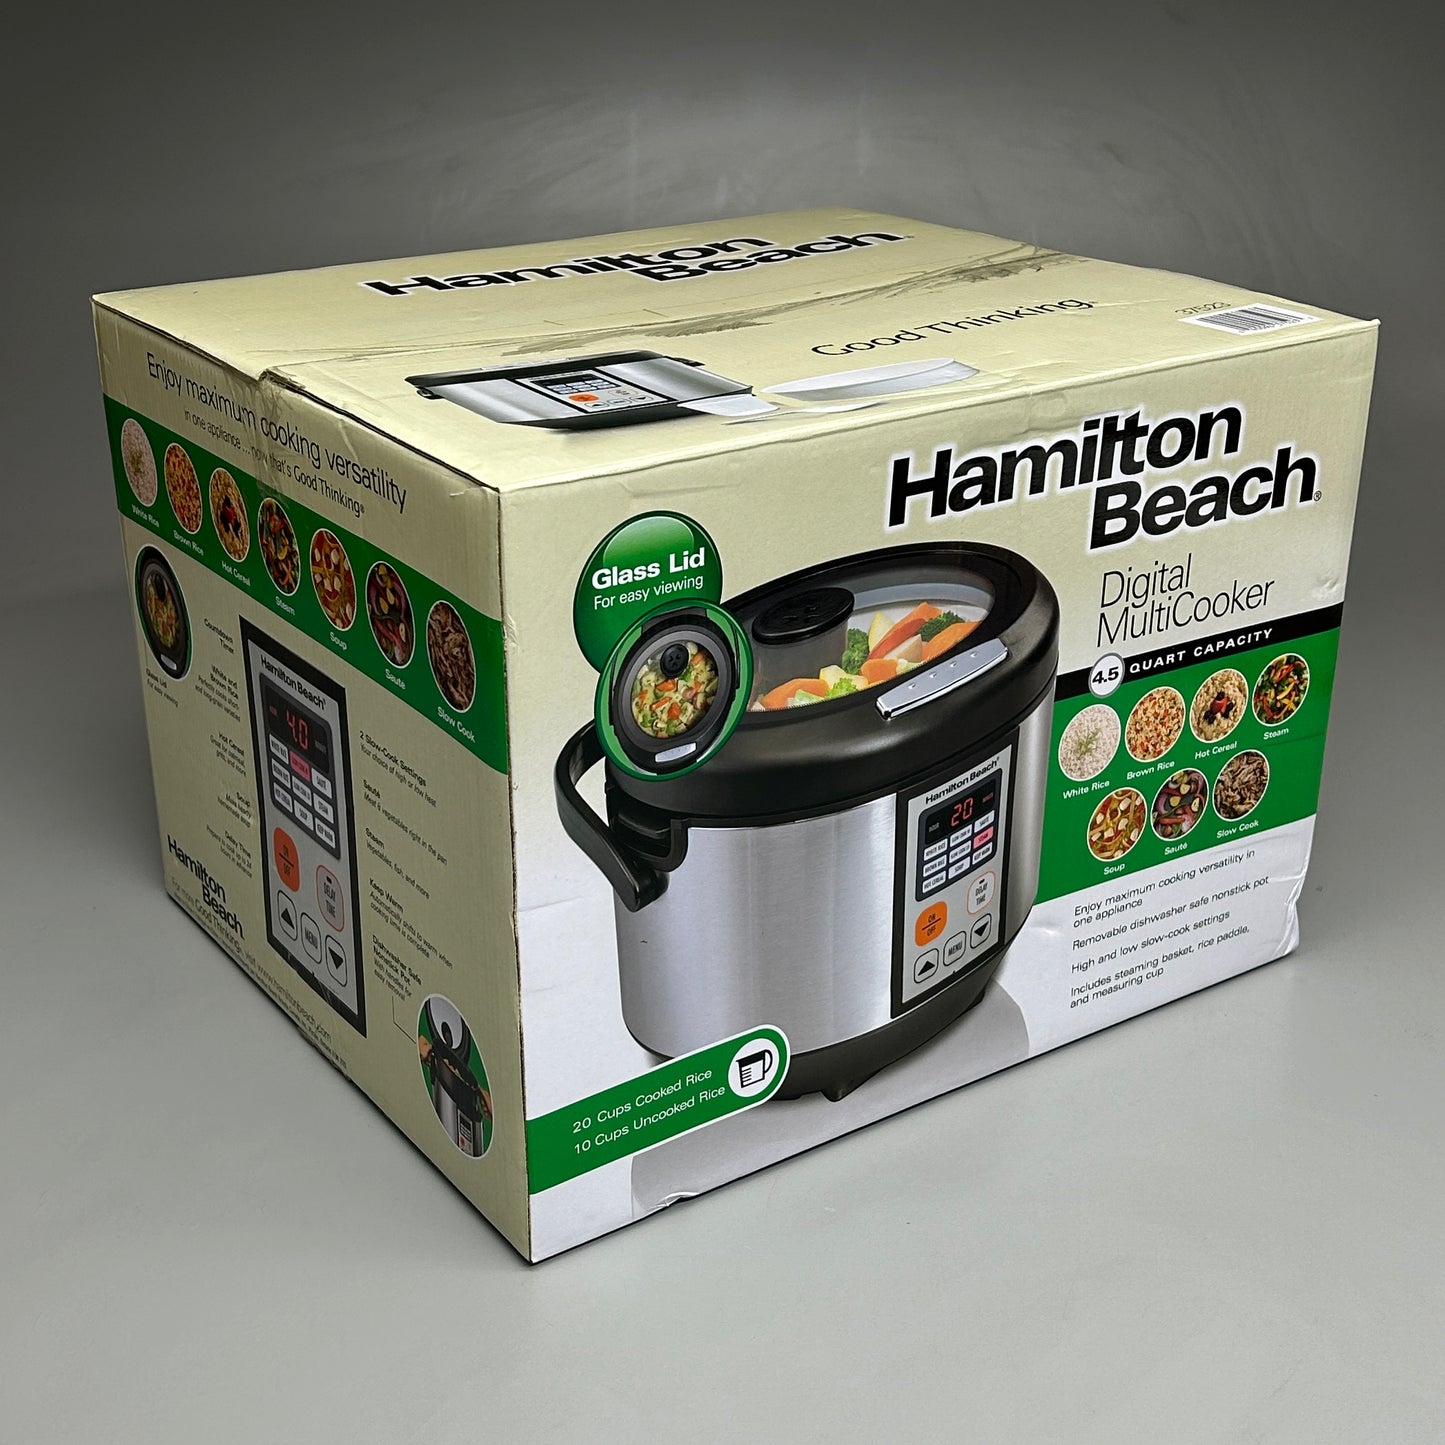 HAMILTON BEACH Digital Multicooker 4.5 Quart Capacity (New)